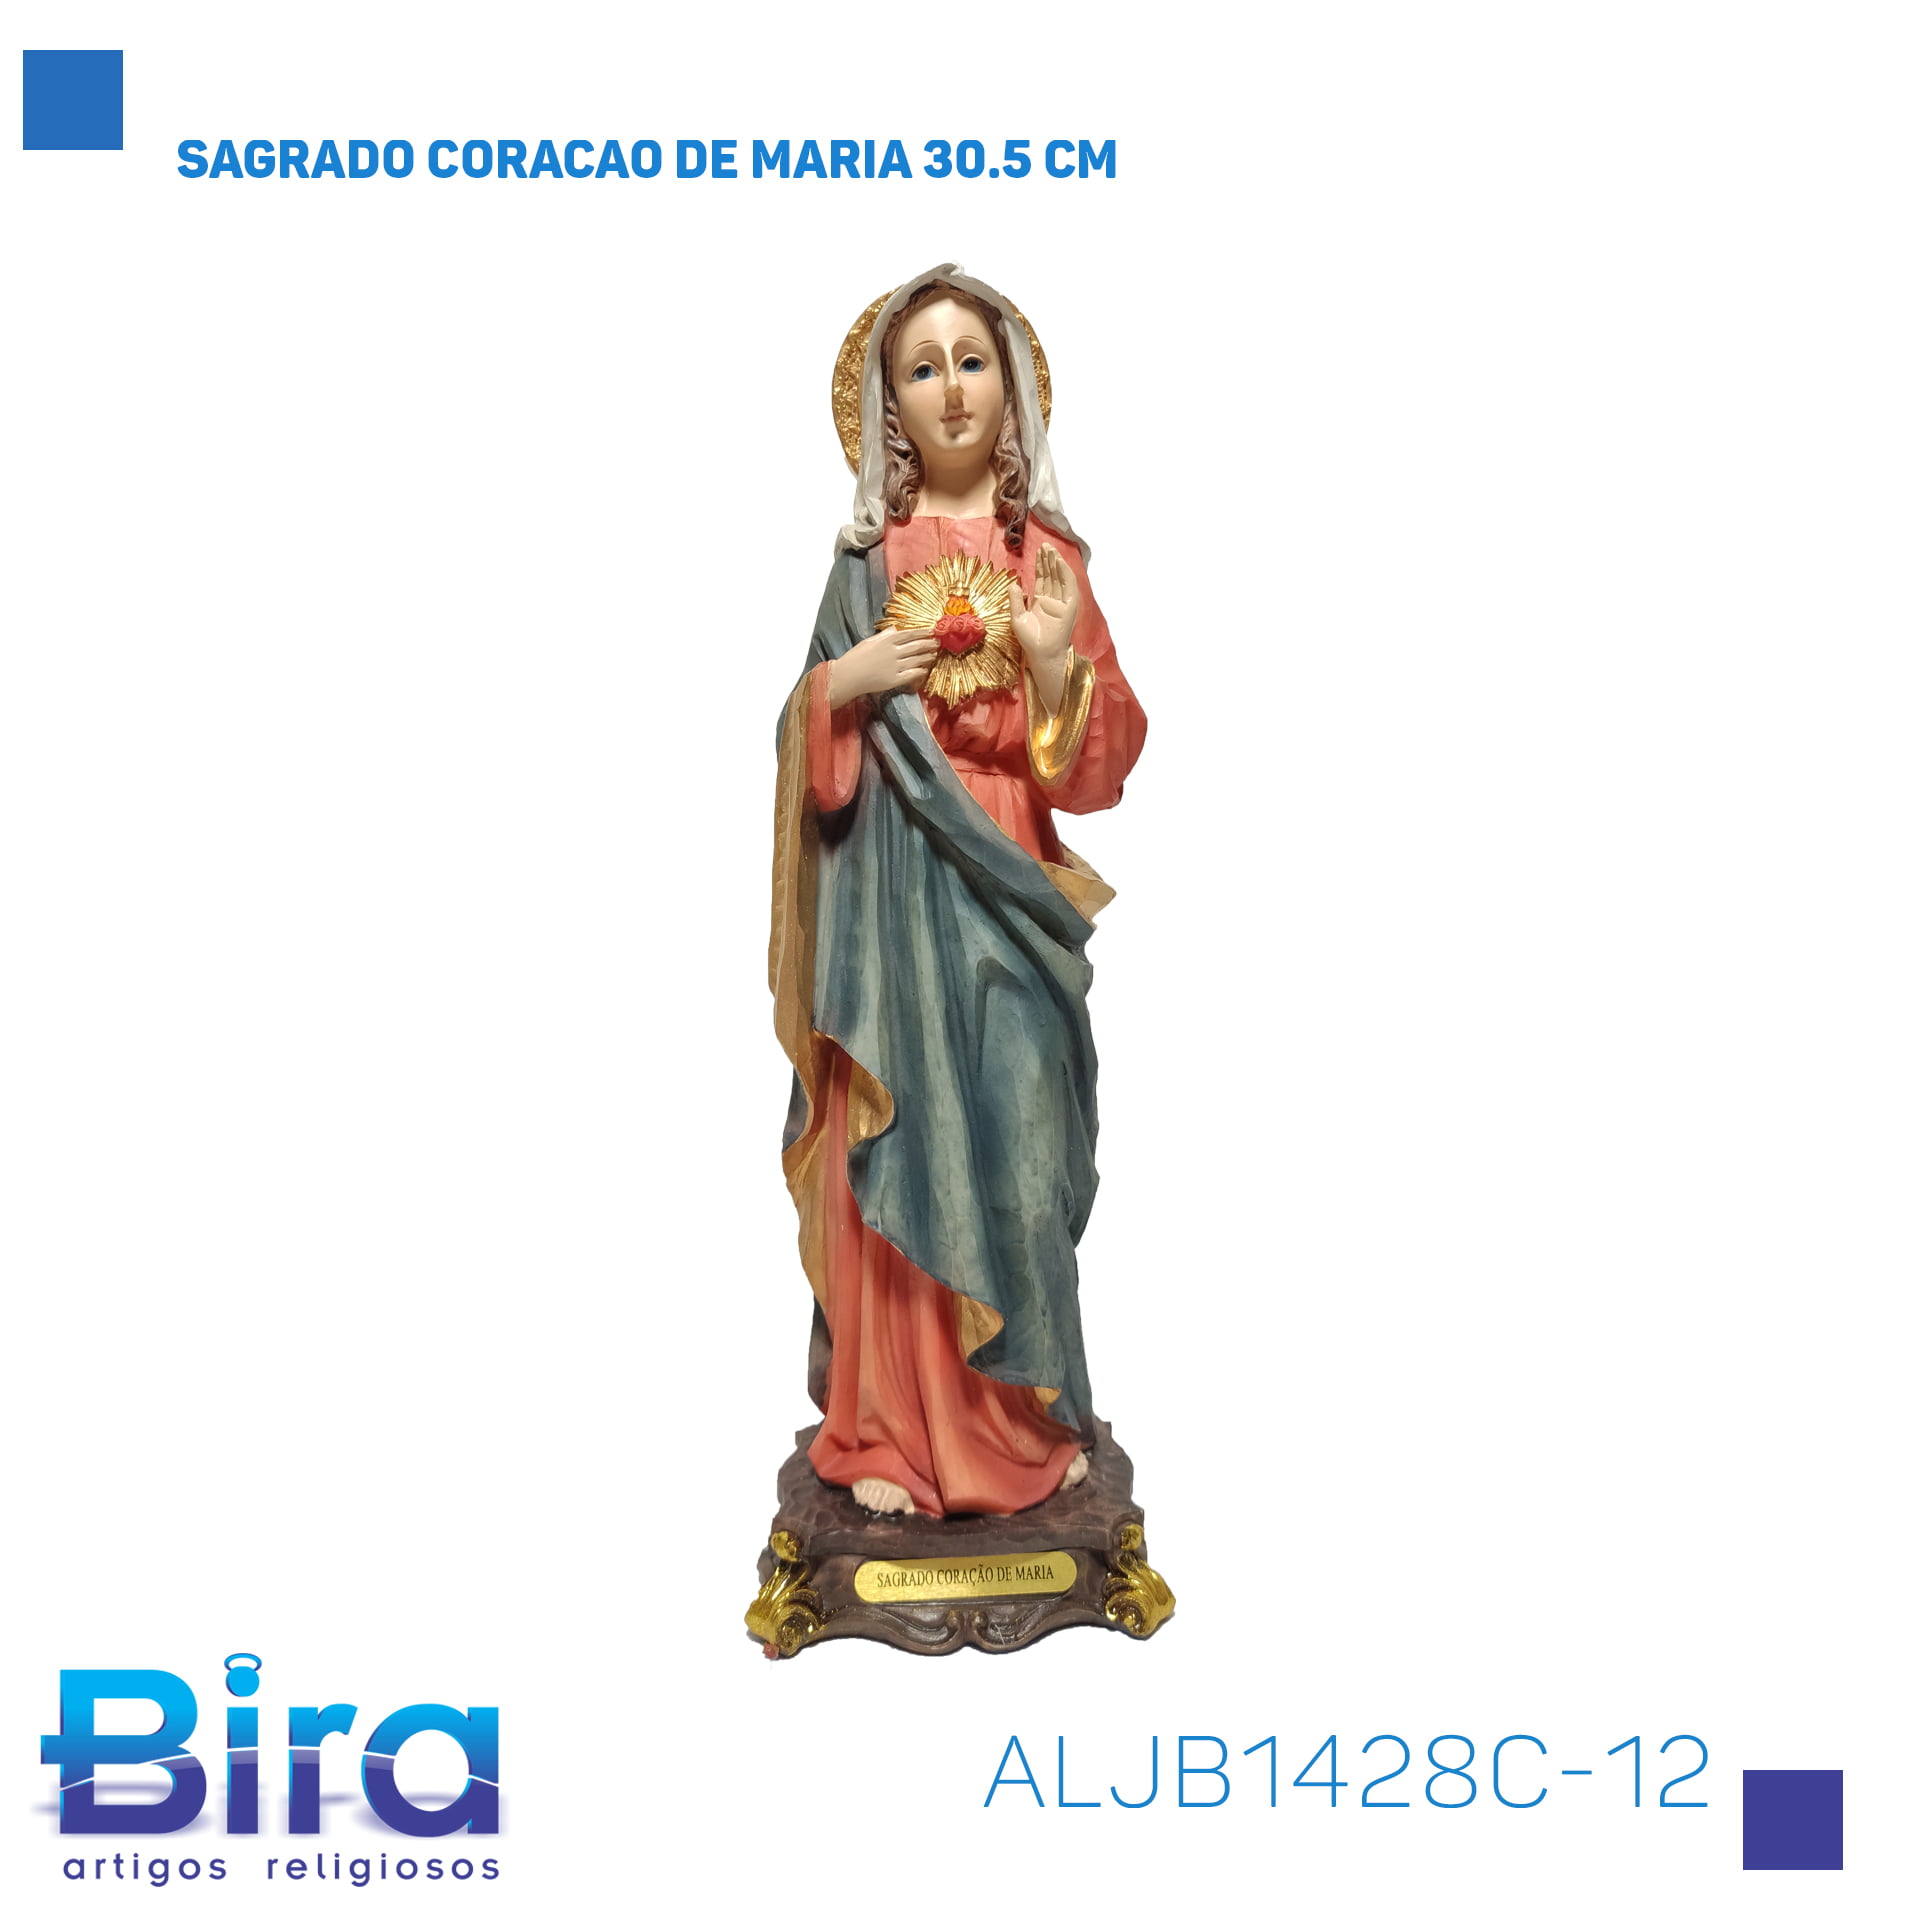 Bira Artigos Religiosos - SAGRADO CORACAO DE MARIA 30.5 CM Cód. ALJB1428C-12